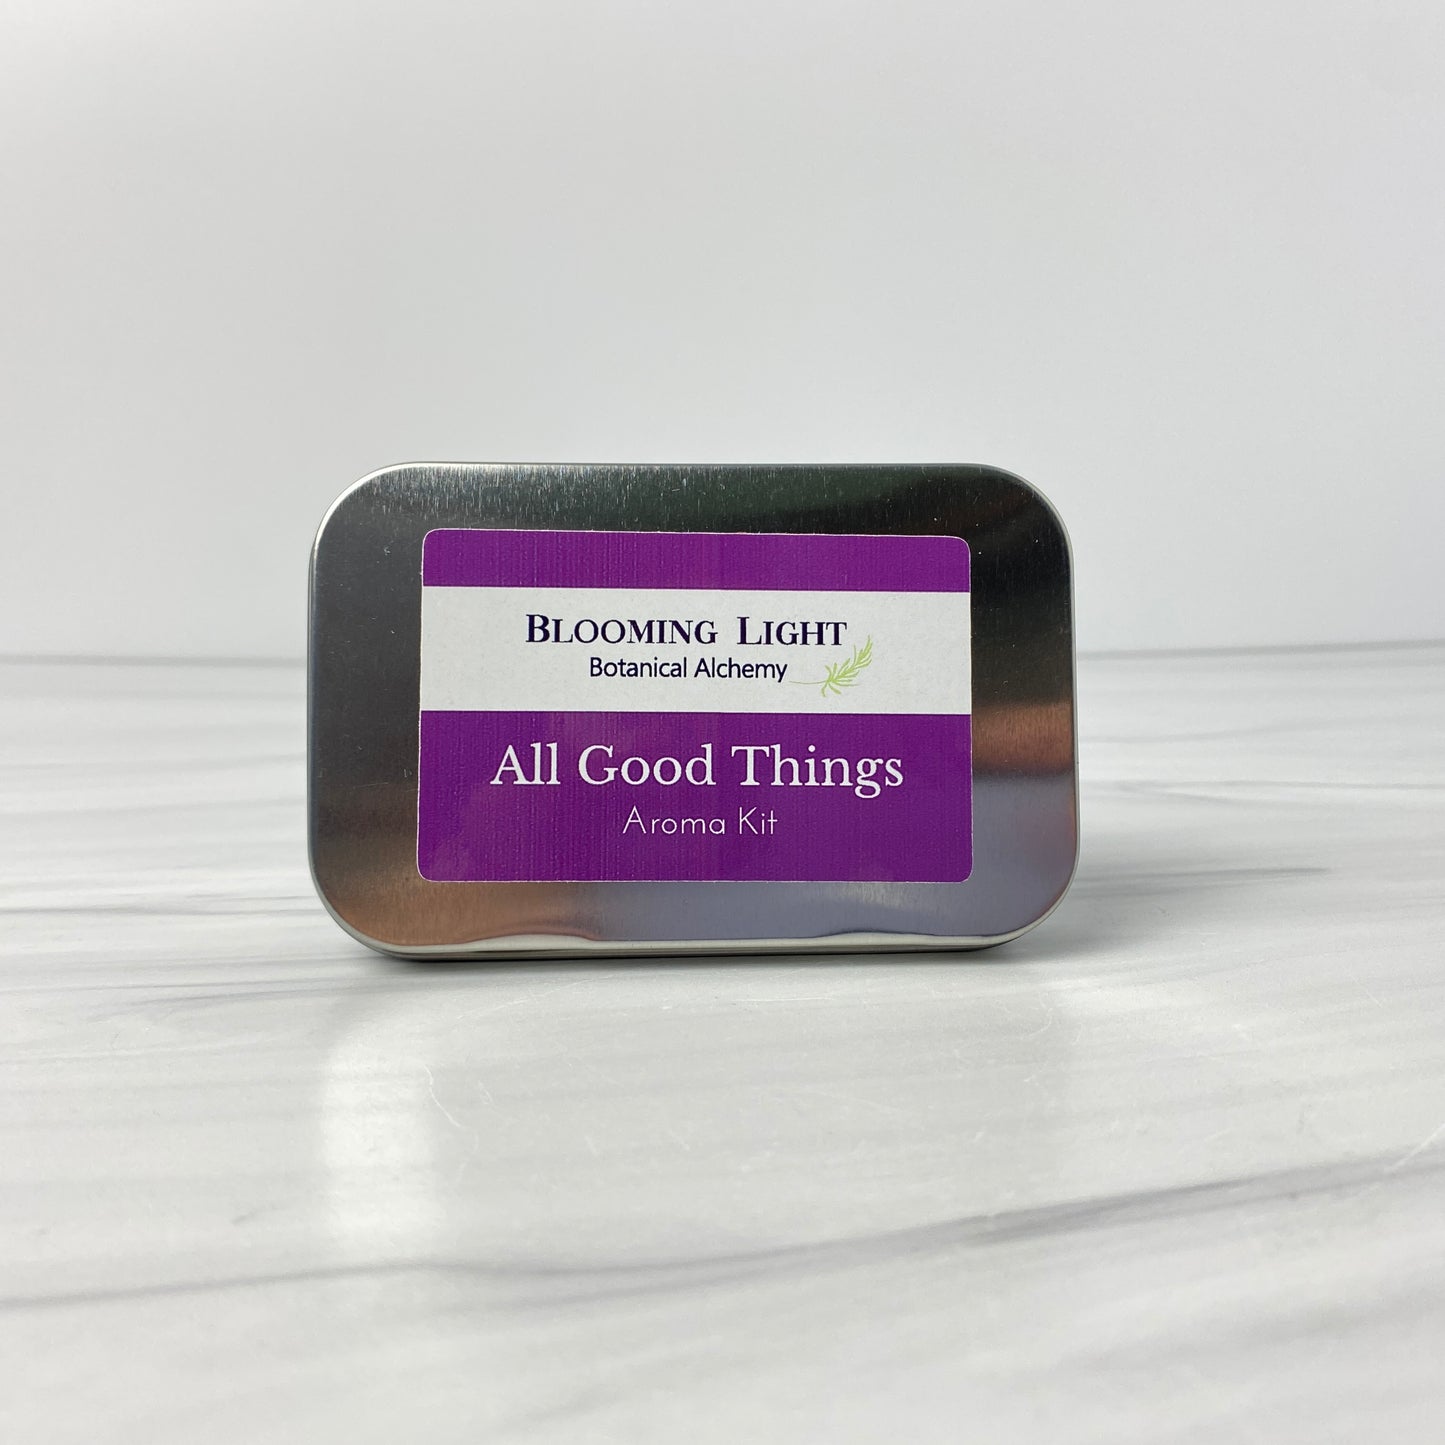 All Good Things aromatherapy Kit